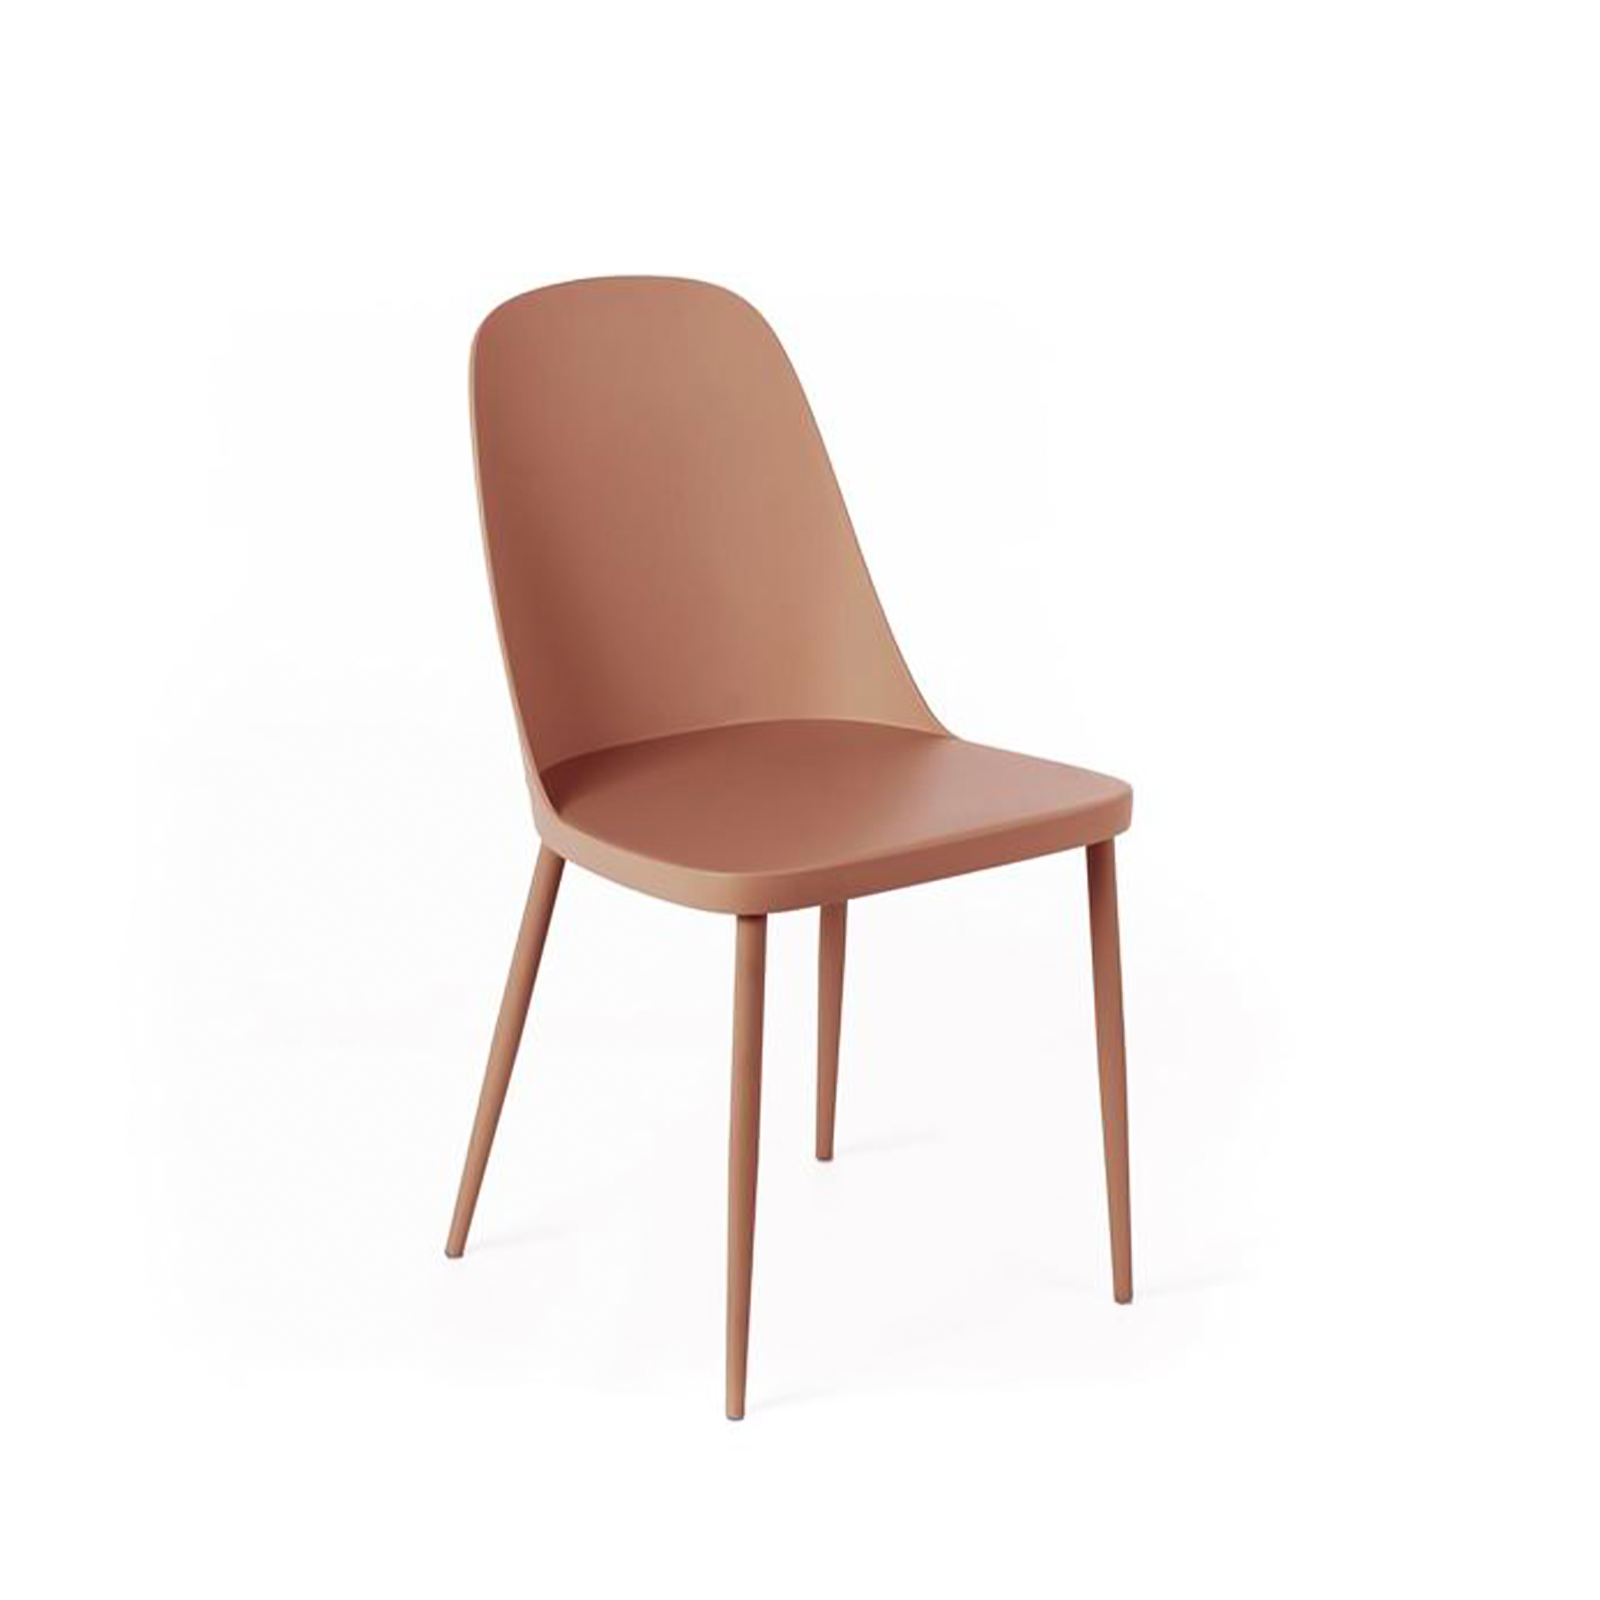 Set di sedie moderne in polipropilene "Paola" con gambe in metallo verniciato